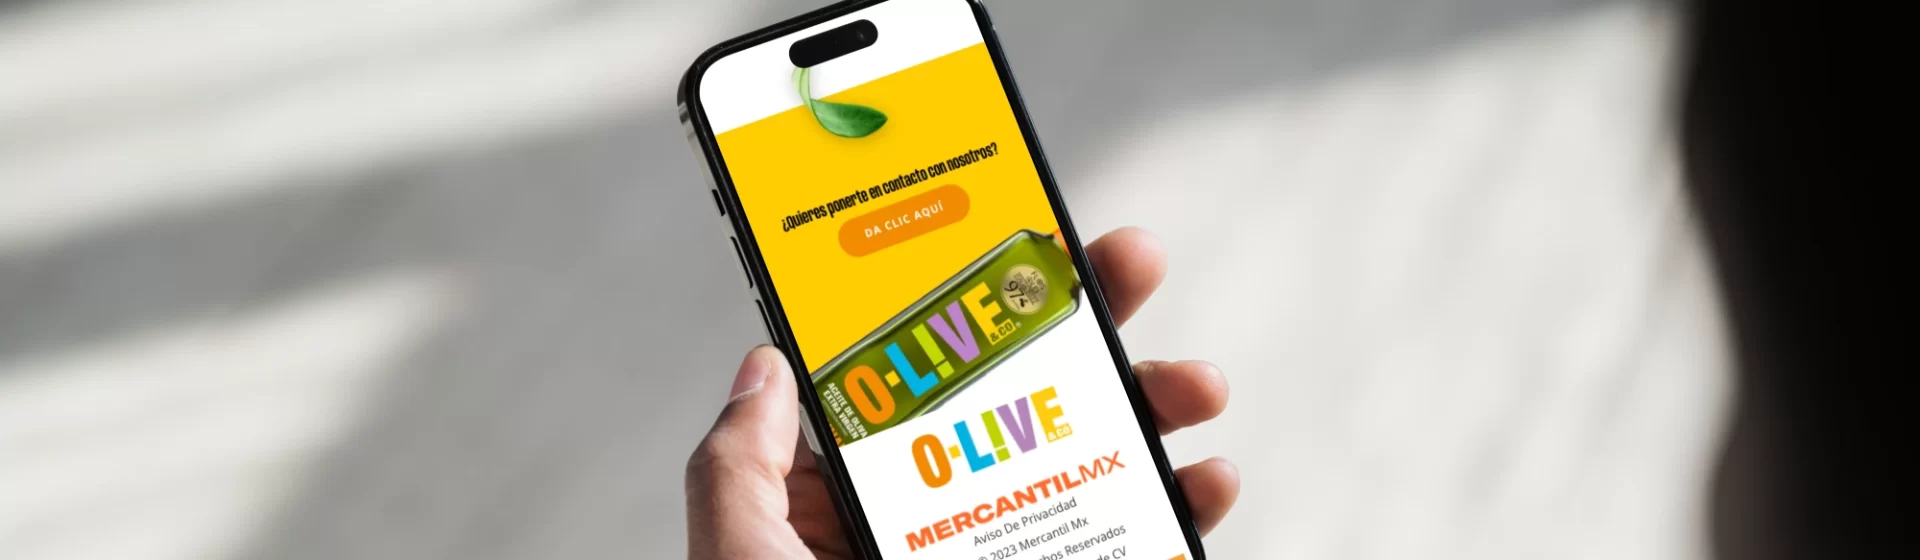 olive web